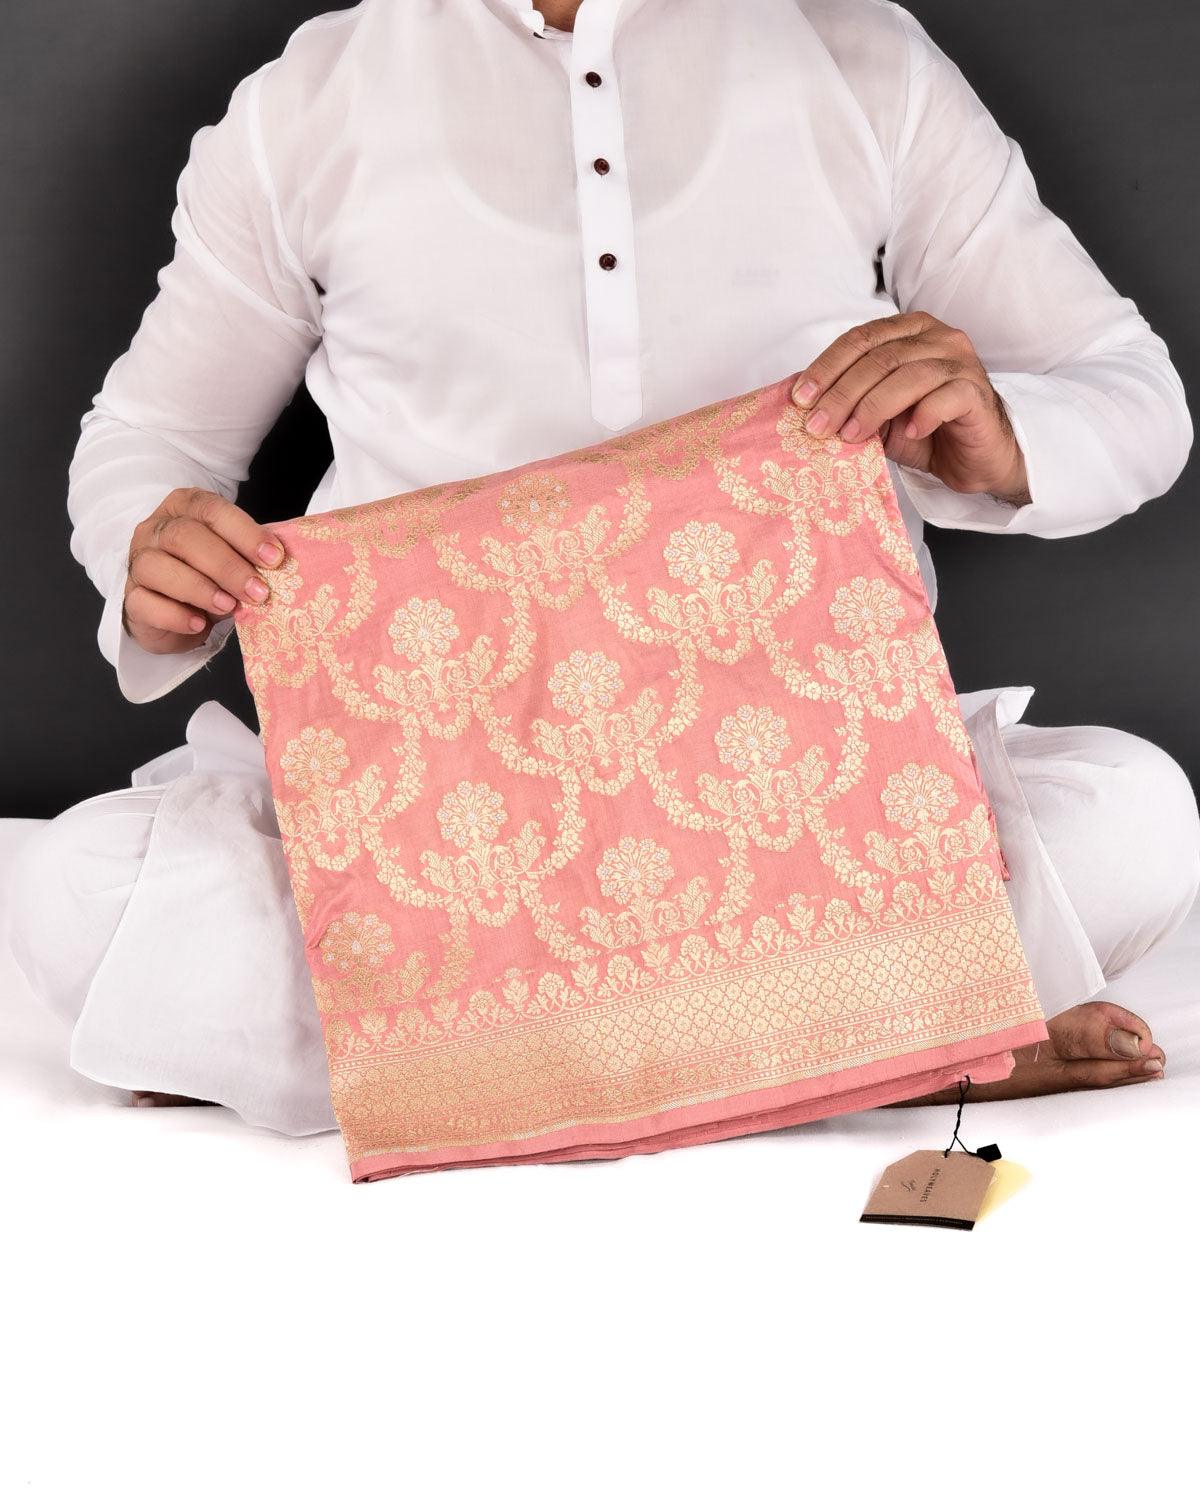 Rosy Brown Banarasi Alfi Sona Rupa Jaal Cutwork Brocade Handwoven Katan Silk Saree - By HolyWeaves, Benares